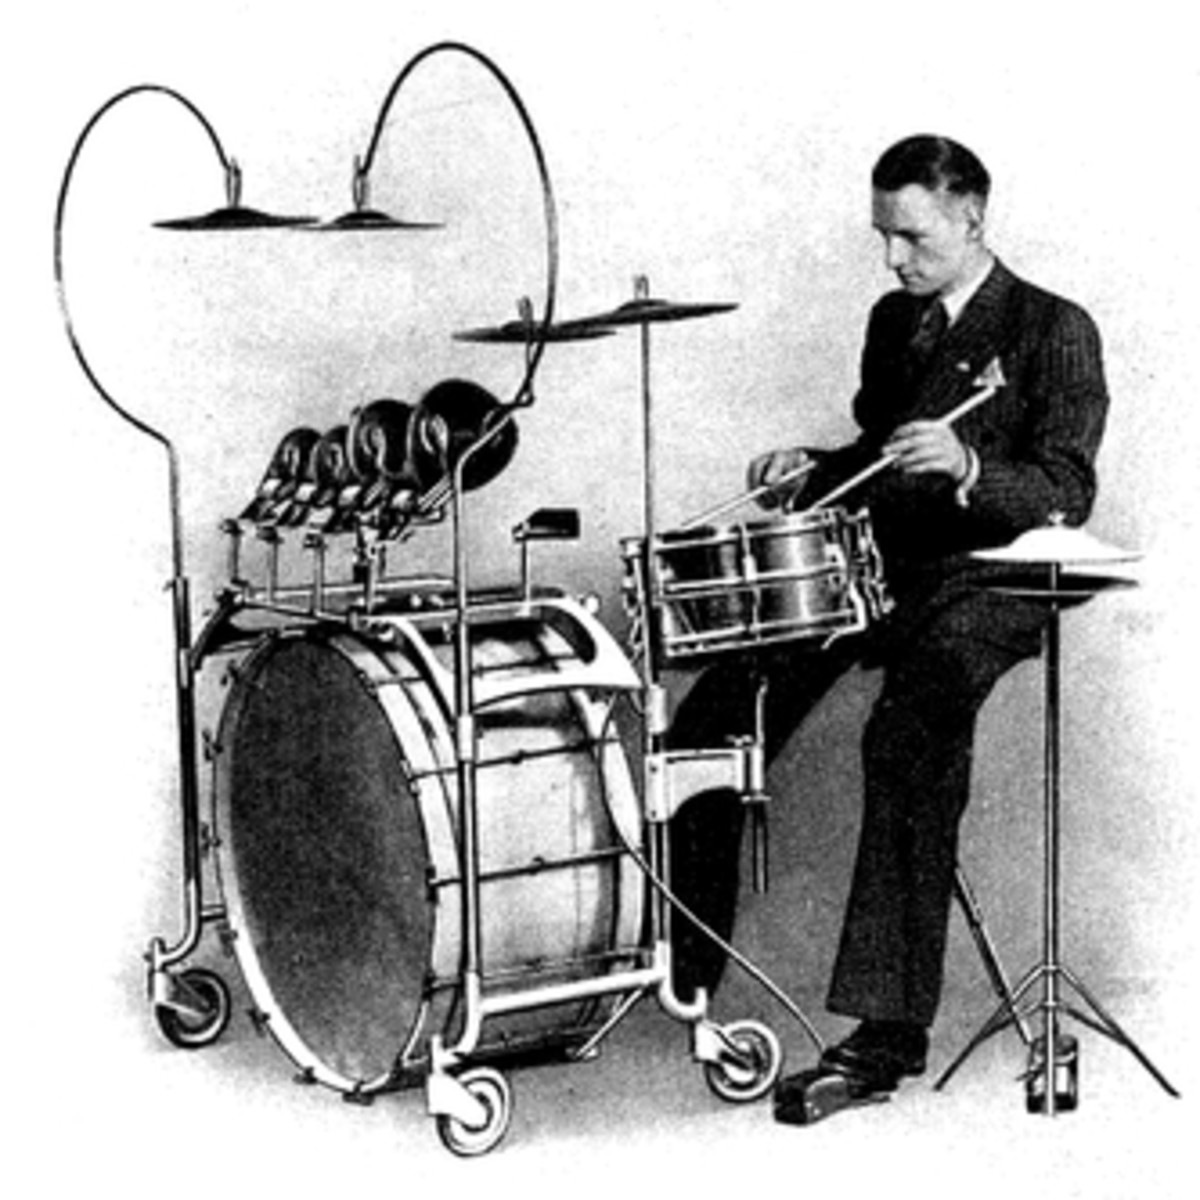 1930's drum kit